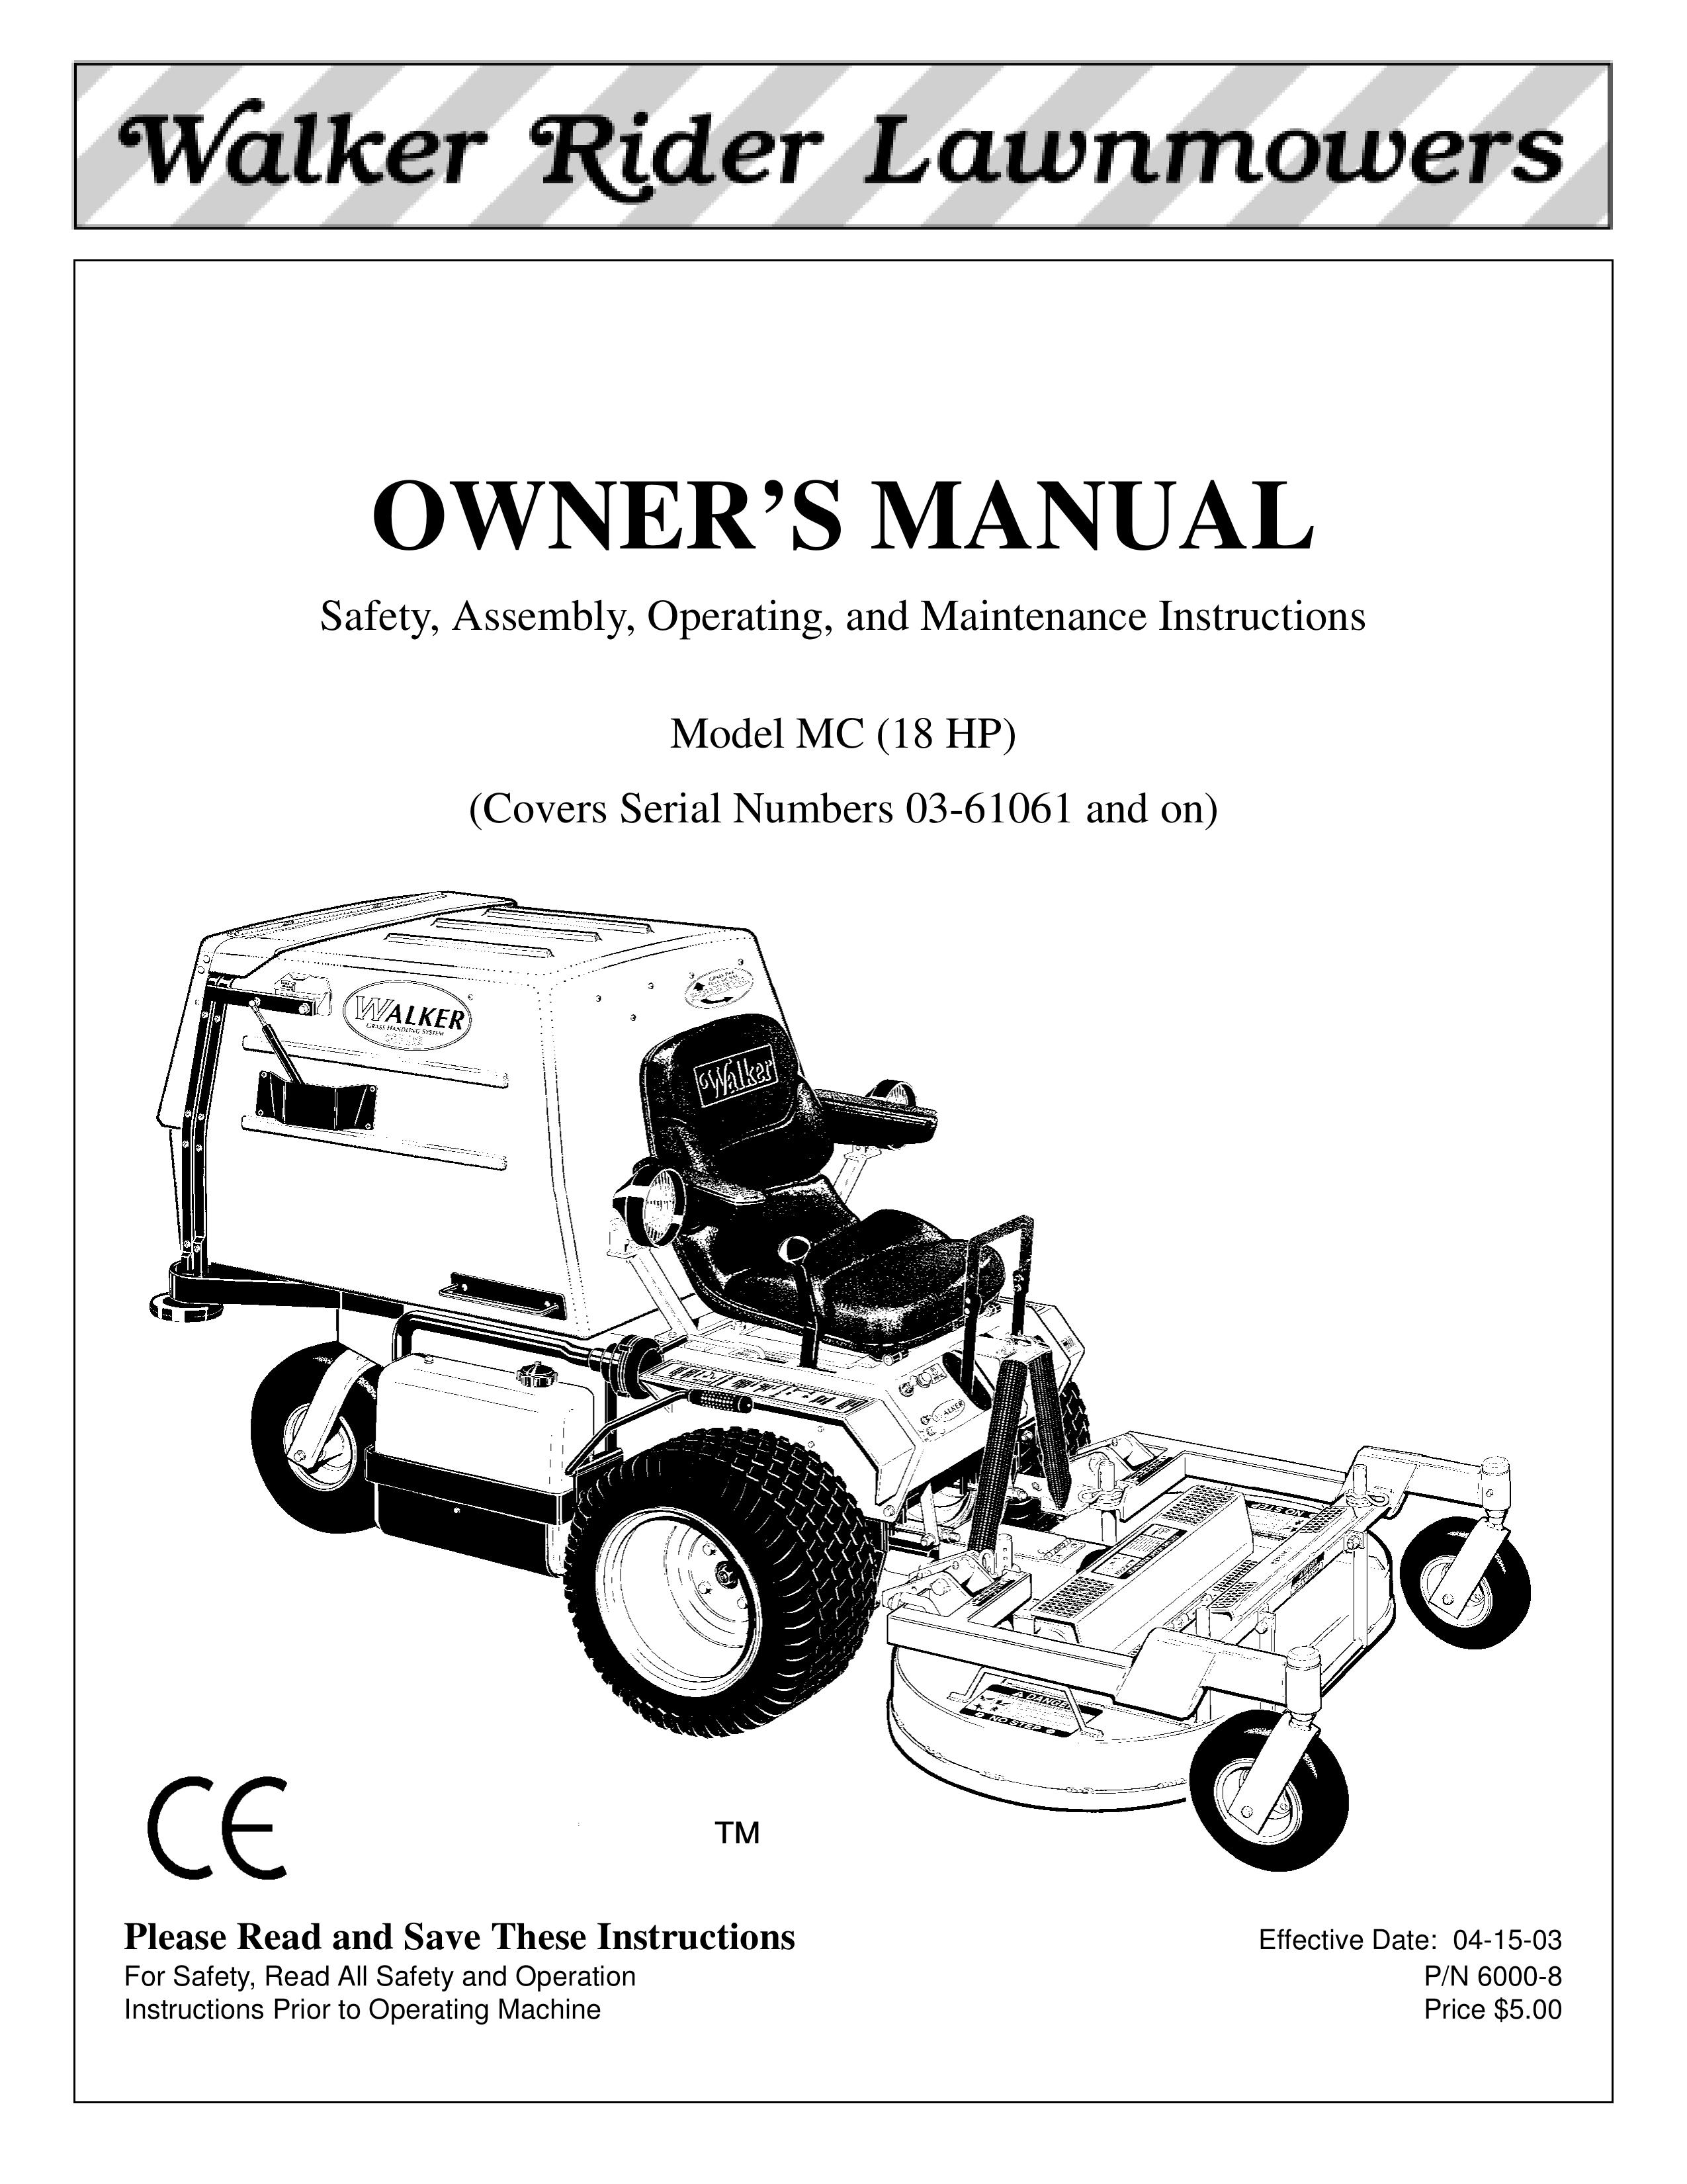 Walker MC (18 HP) Lawn Mower User Manual